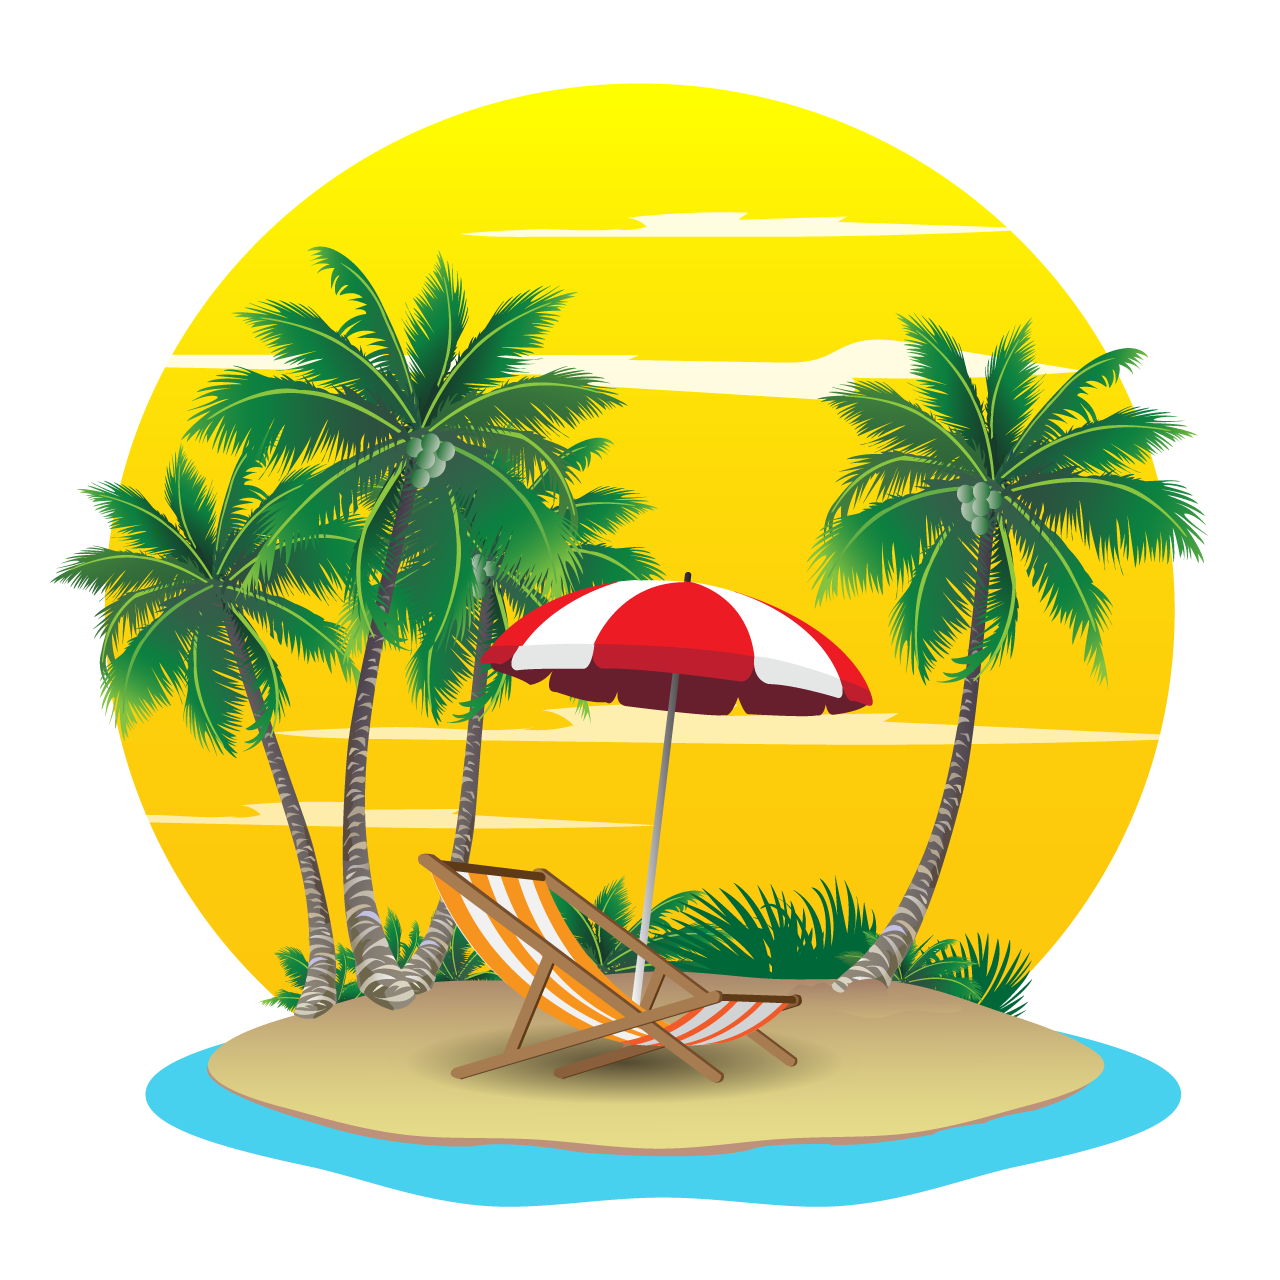 Sun clipart small island cartoon illustration image